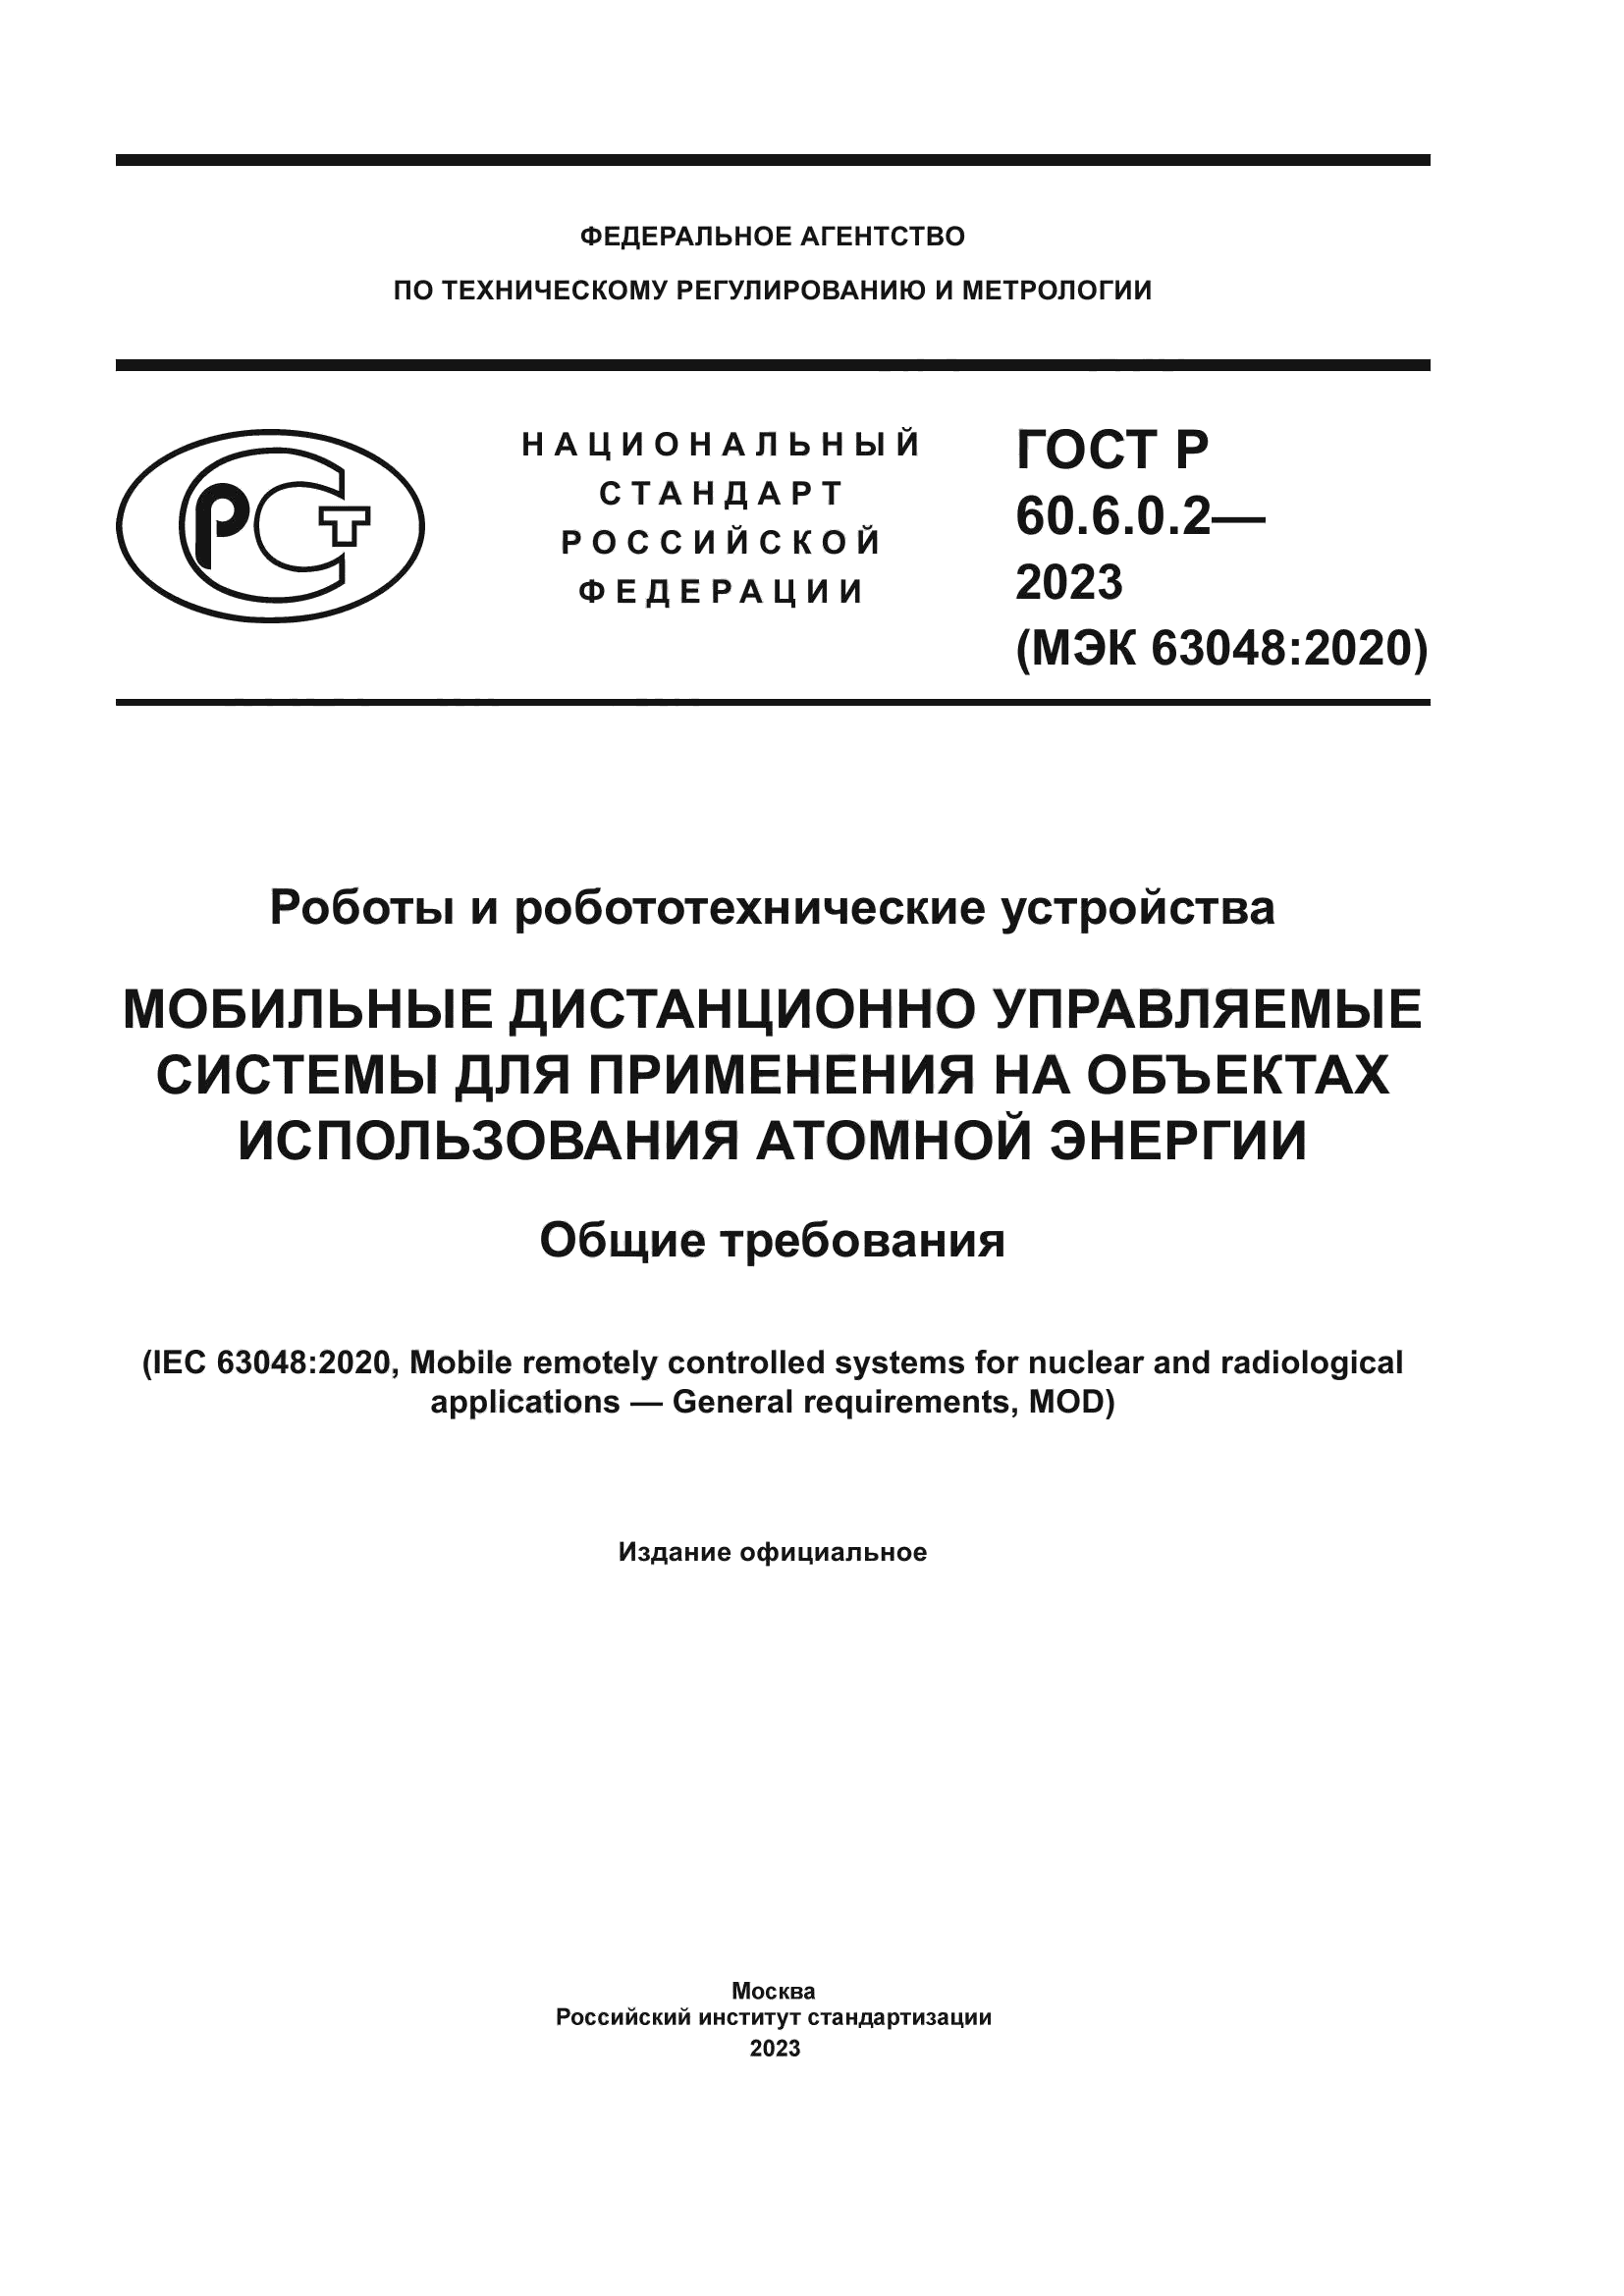 ГОСТ Р 60.6.0.2-2023